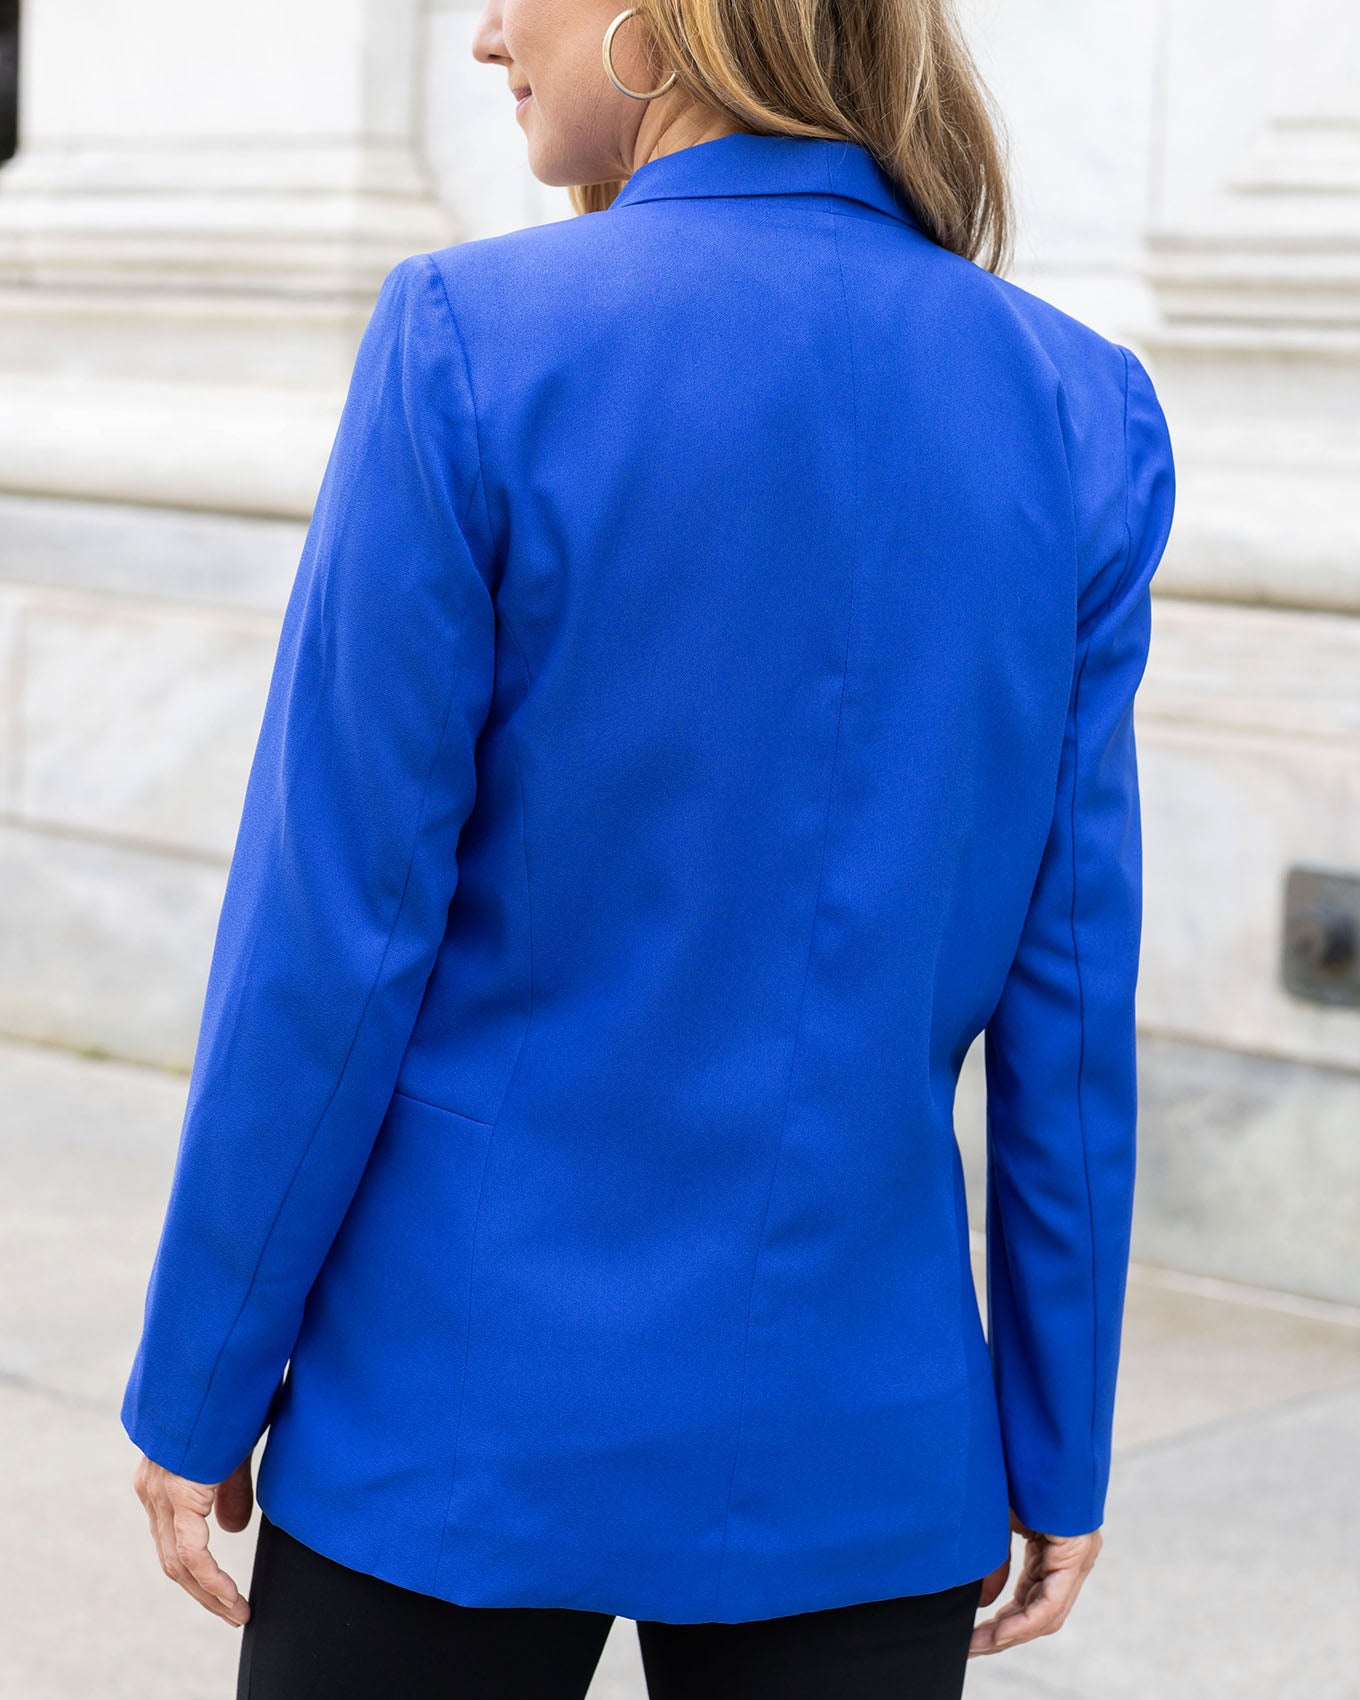 back view of pocketed royal blue fashion blazer